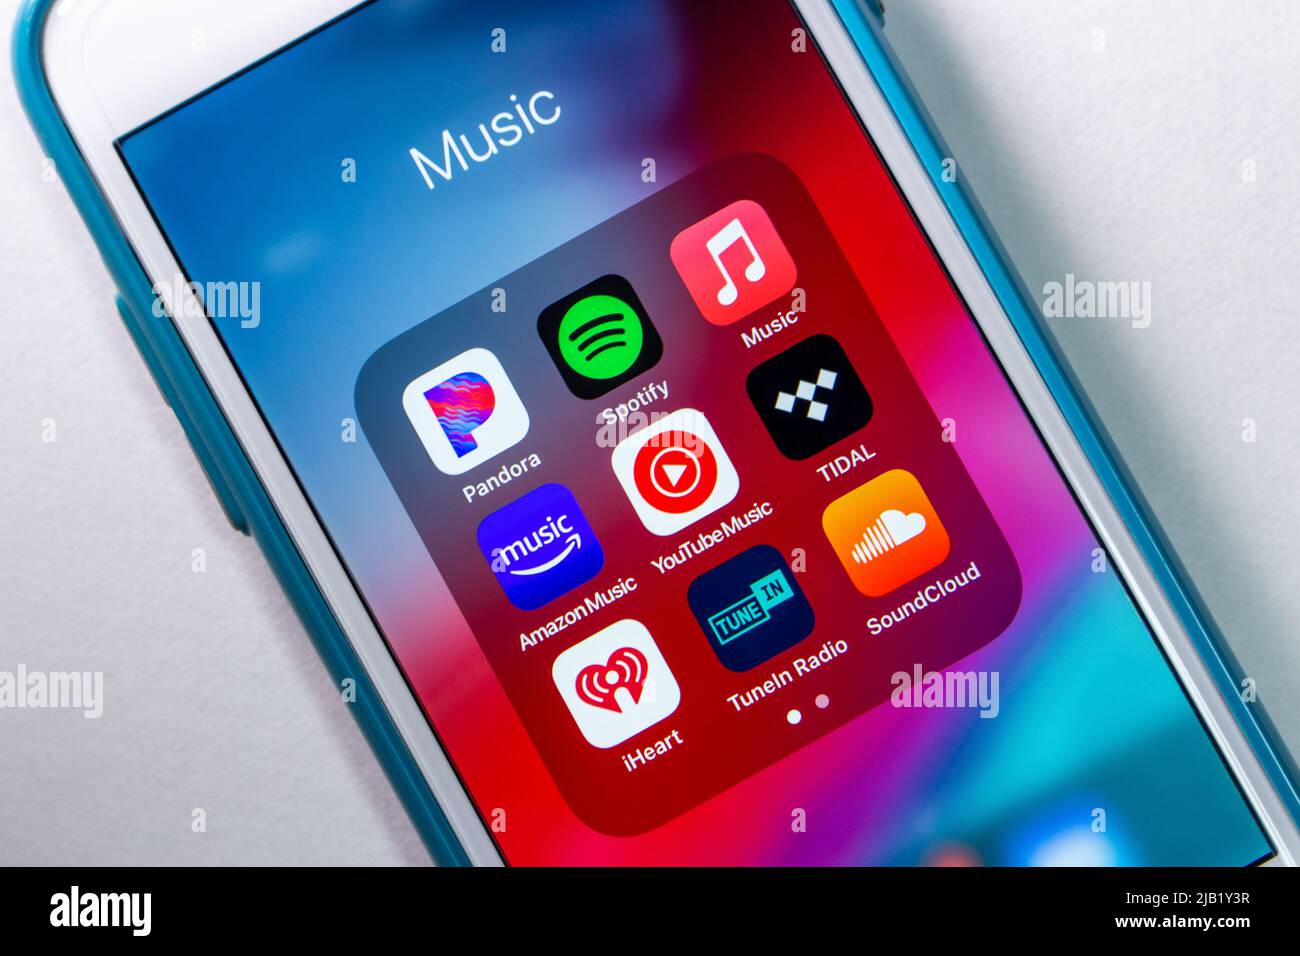 Subscription music streaming & radio apps (Pandora, Spotify, Apple Music, Amazon Music, YouTube Music, Tidal app, iHeart, Tuneln Radio, SoundCloud) Stock Photo